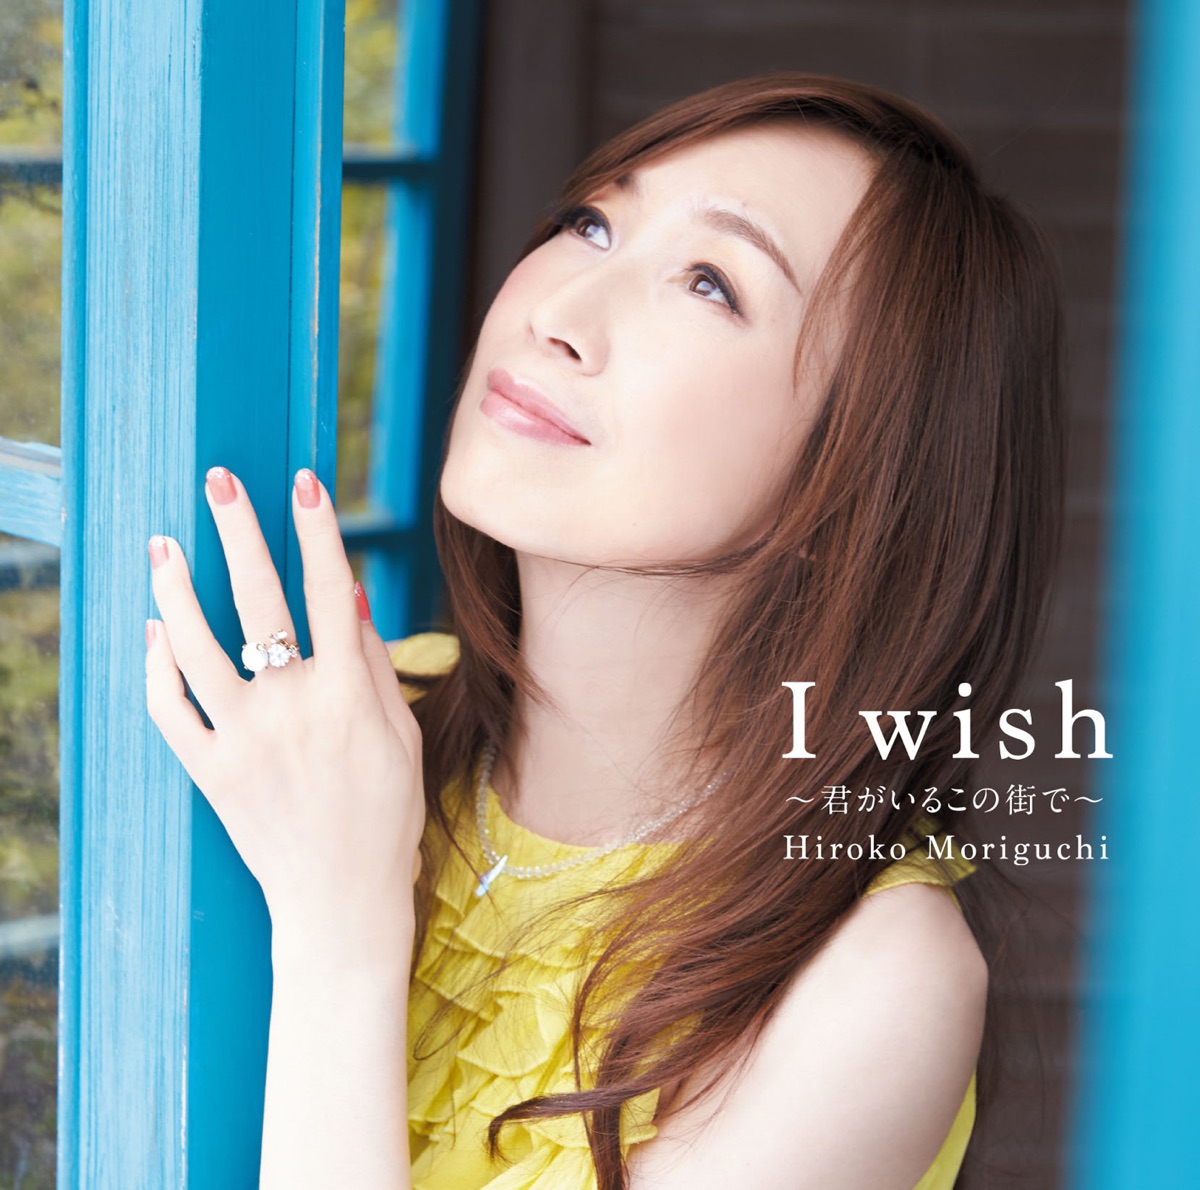 Cover art for『Hiroko Moriguchi - いつもそばに...』from the release『I wish ~Kimi ga Iru Kono Machi de~